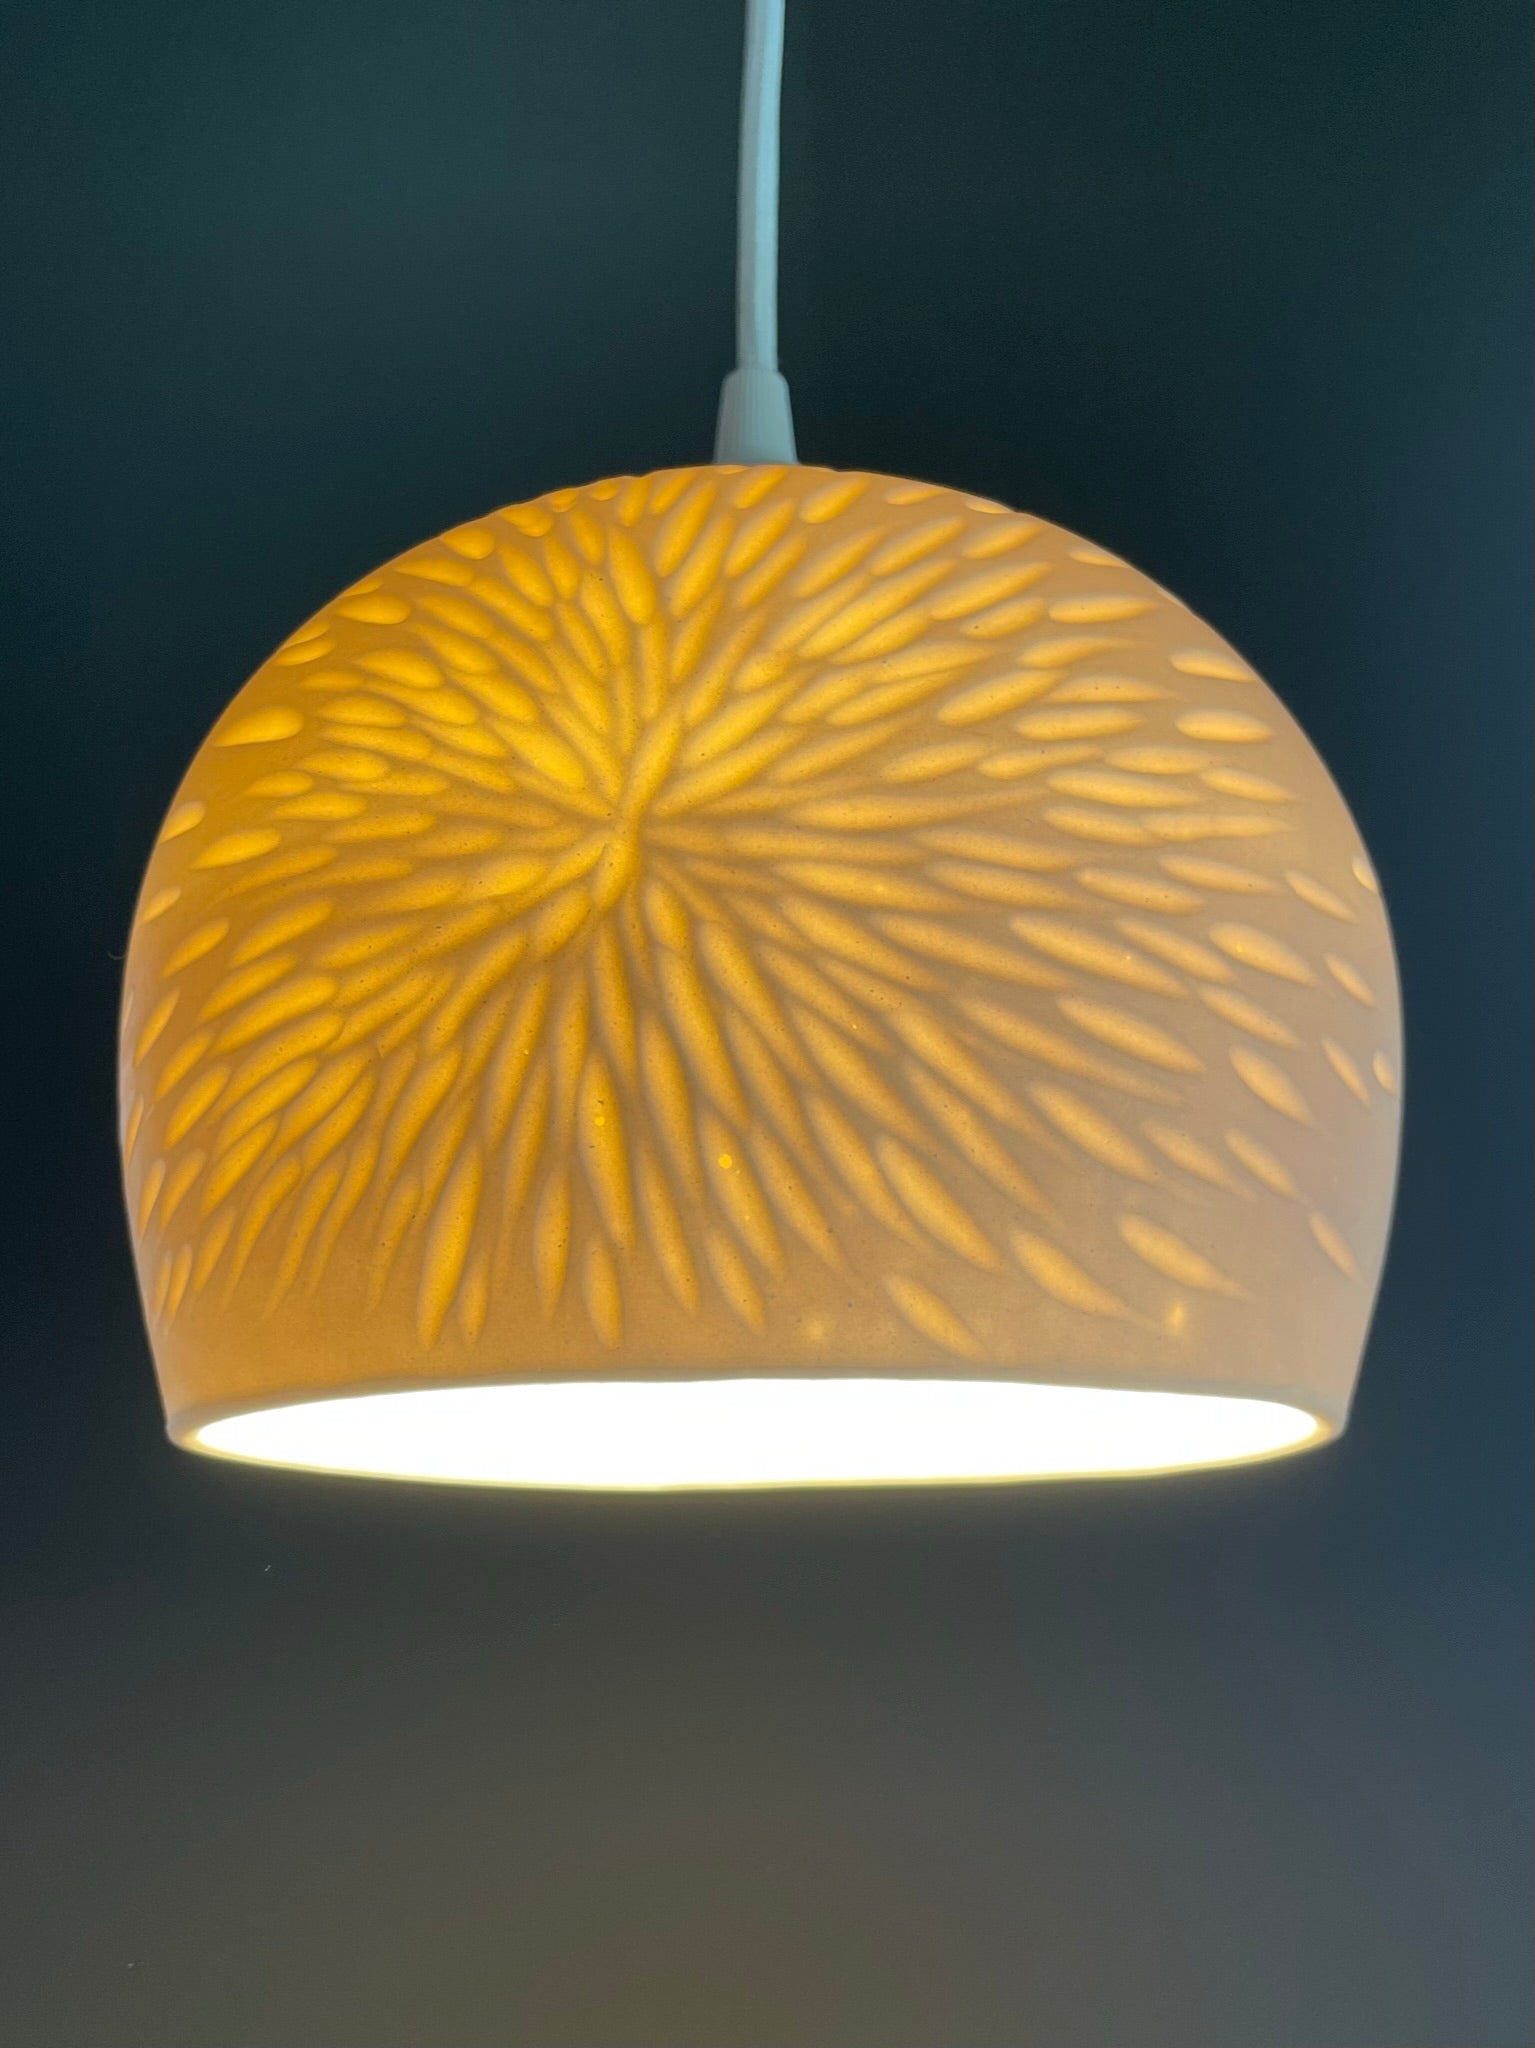 Sunburst pendant lamp sphere